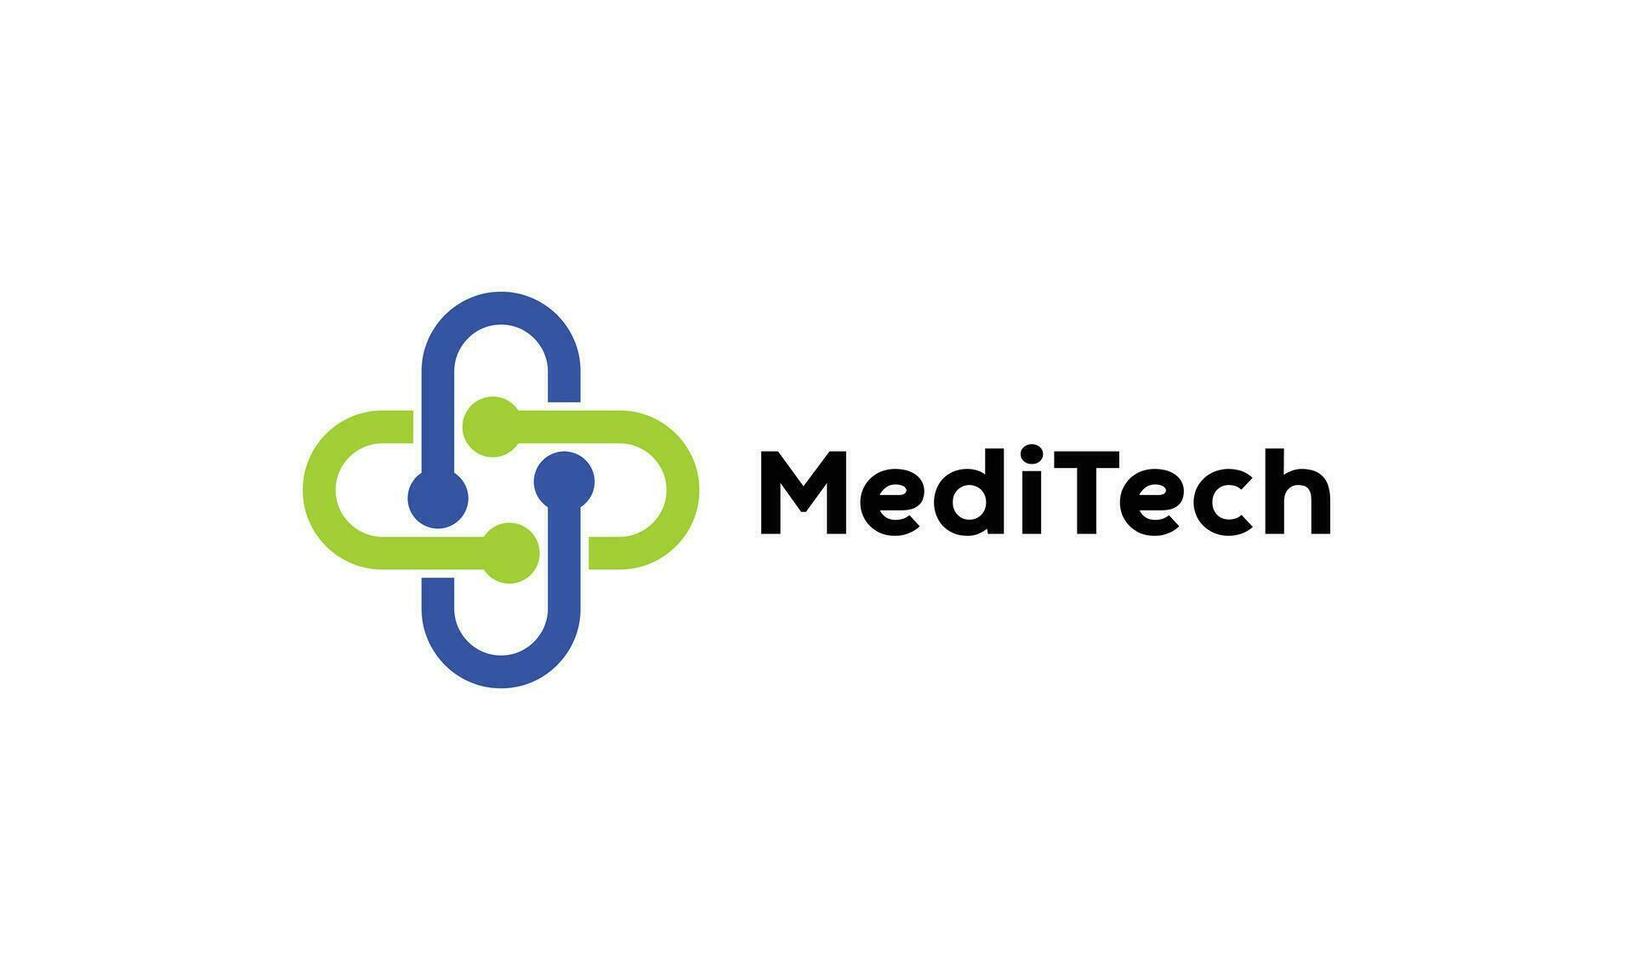 Medical cross line logo minimalist style for hospital or clinic vector